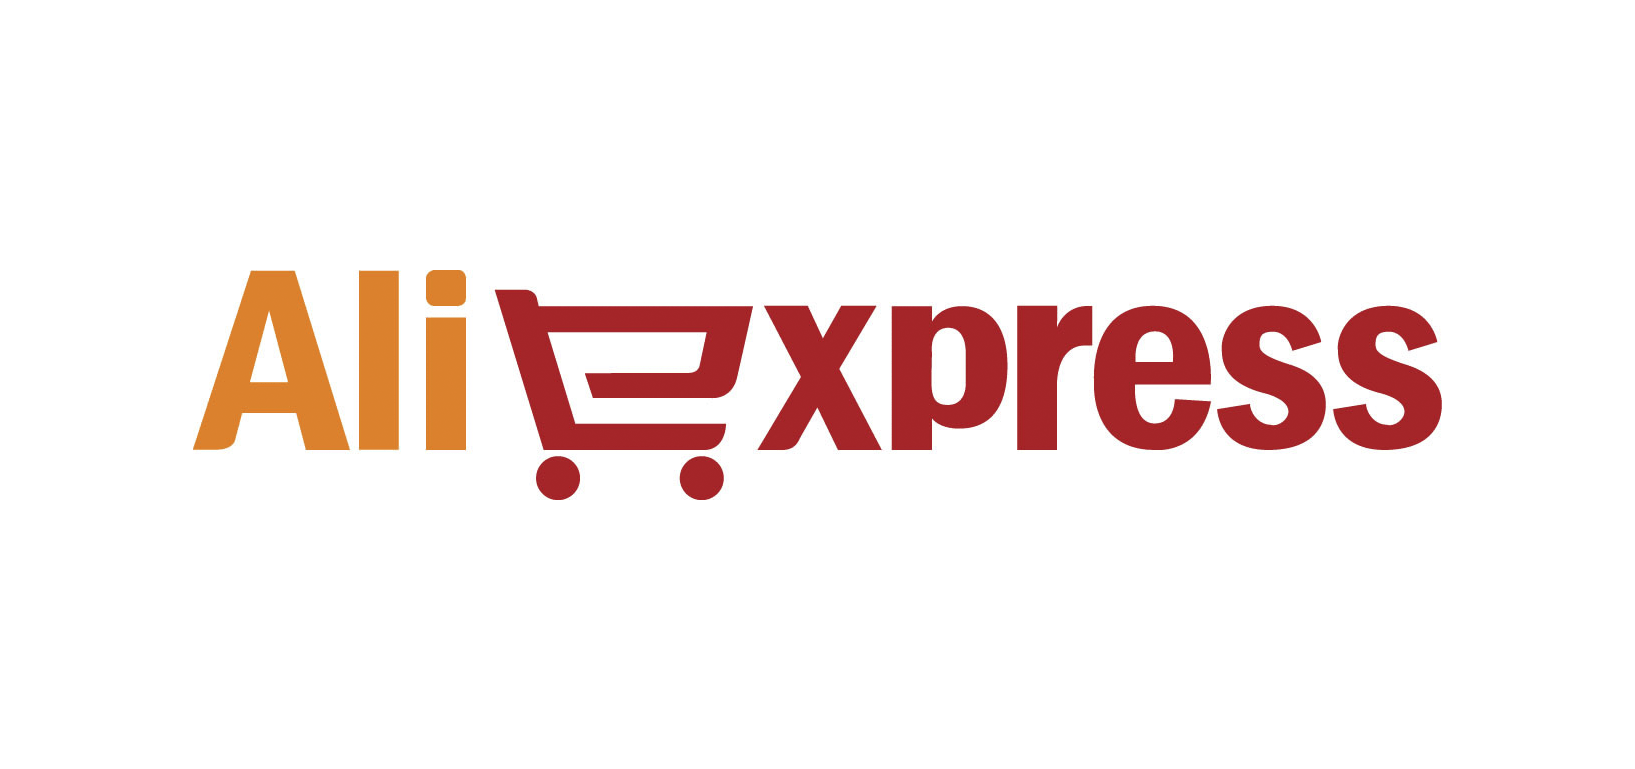 aliexpress standar shipping